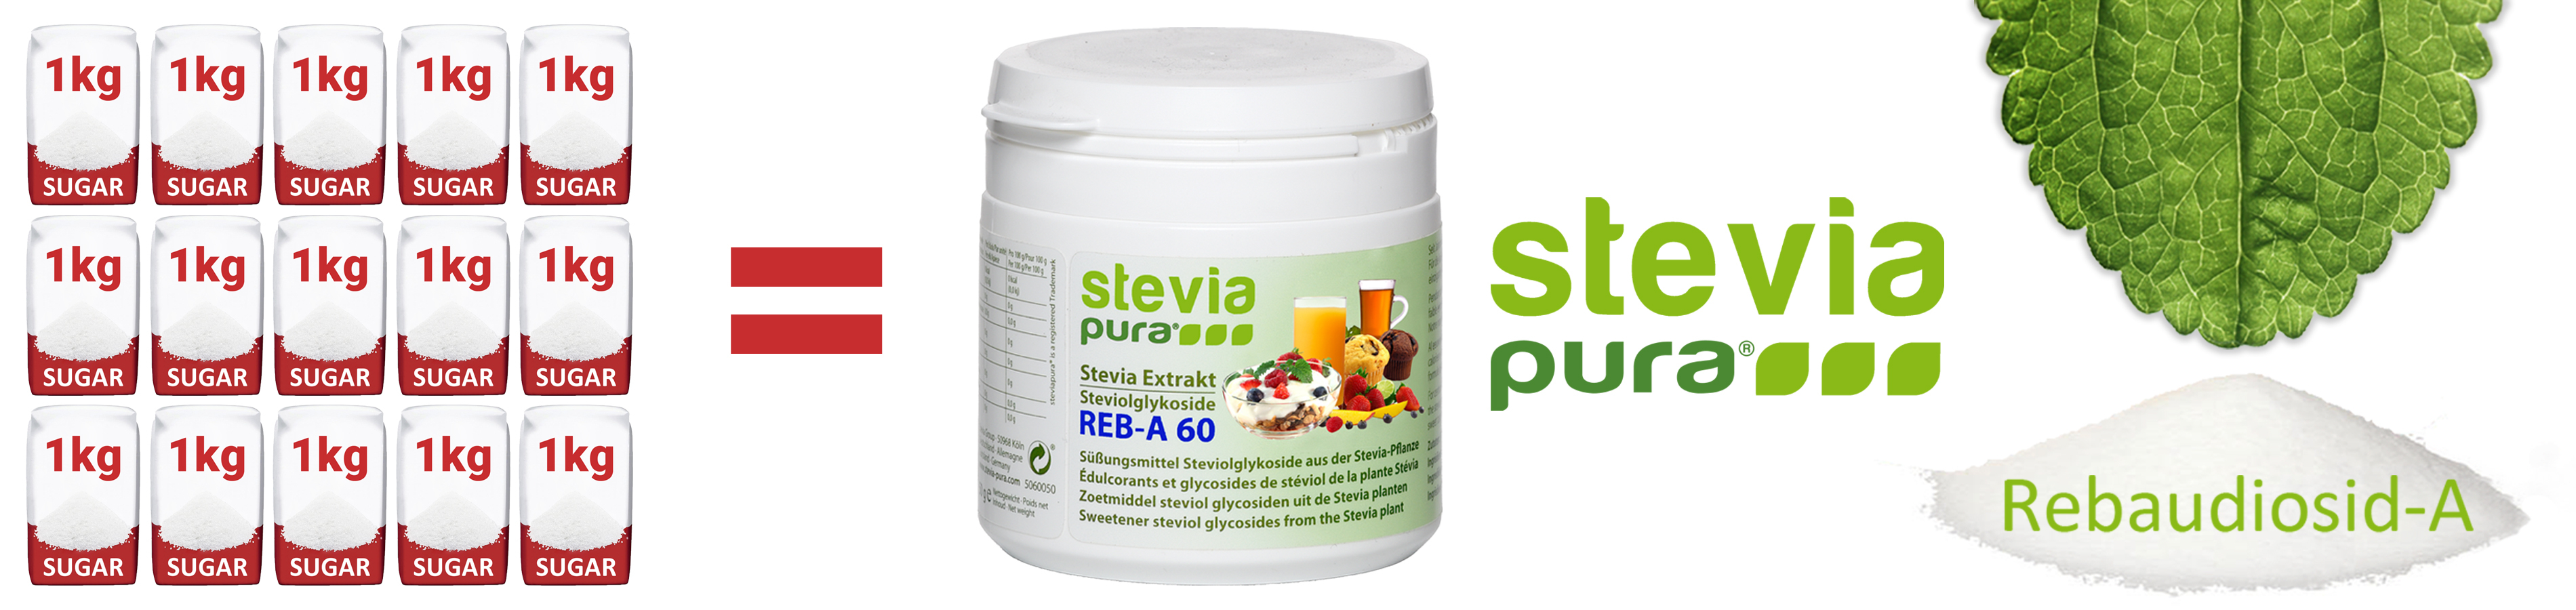 100% Pure Stevia Powder Rebaudioside-A 60% Pure Stevia...